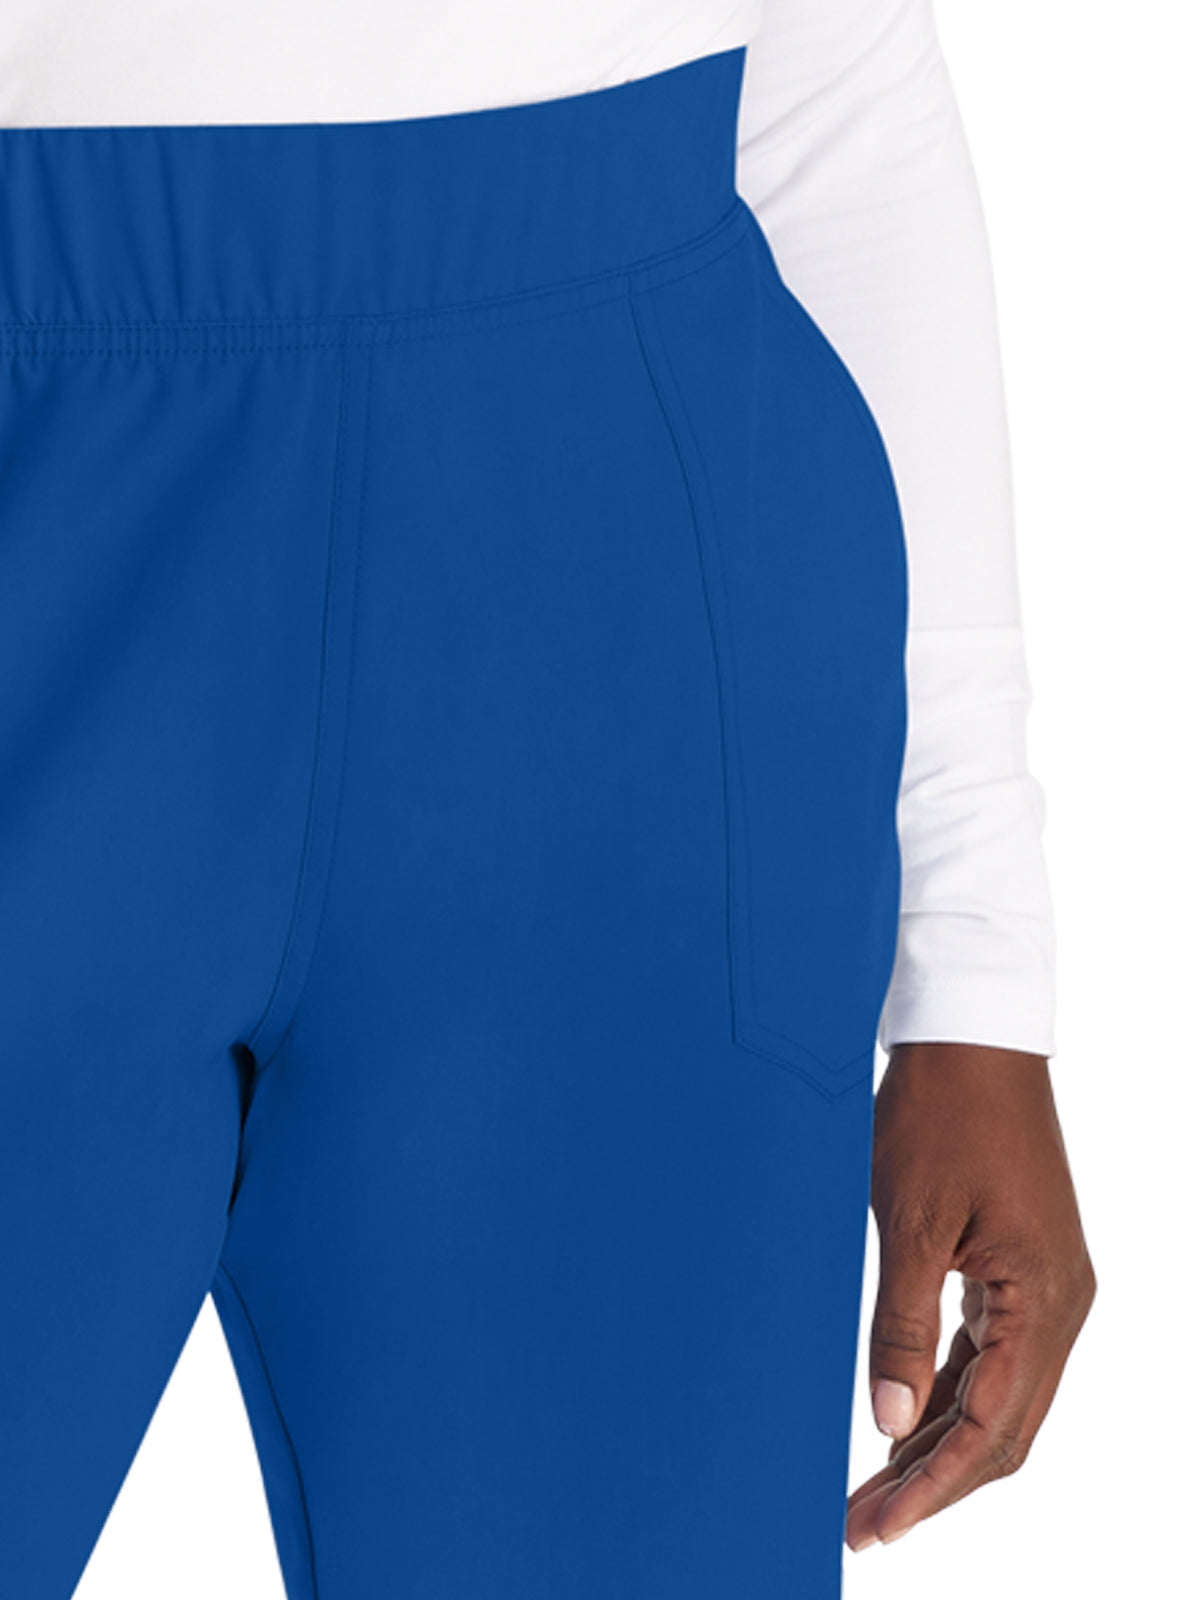 Women's 5-Pocket Tapered Leg Scrub Pant - DK221 - Galaxy Blue